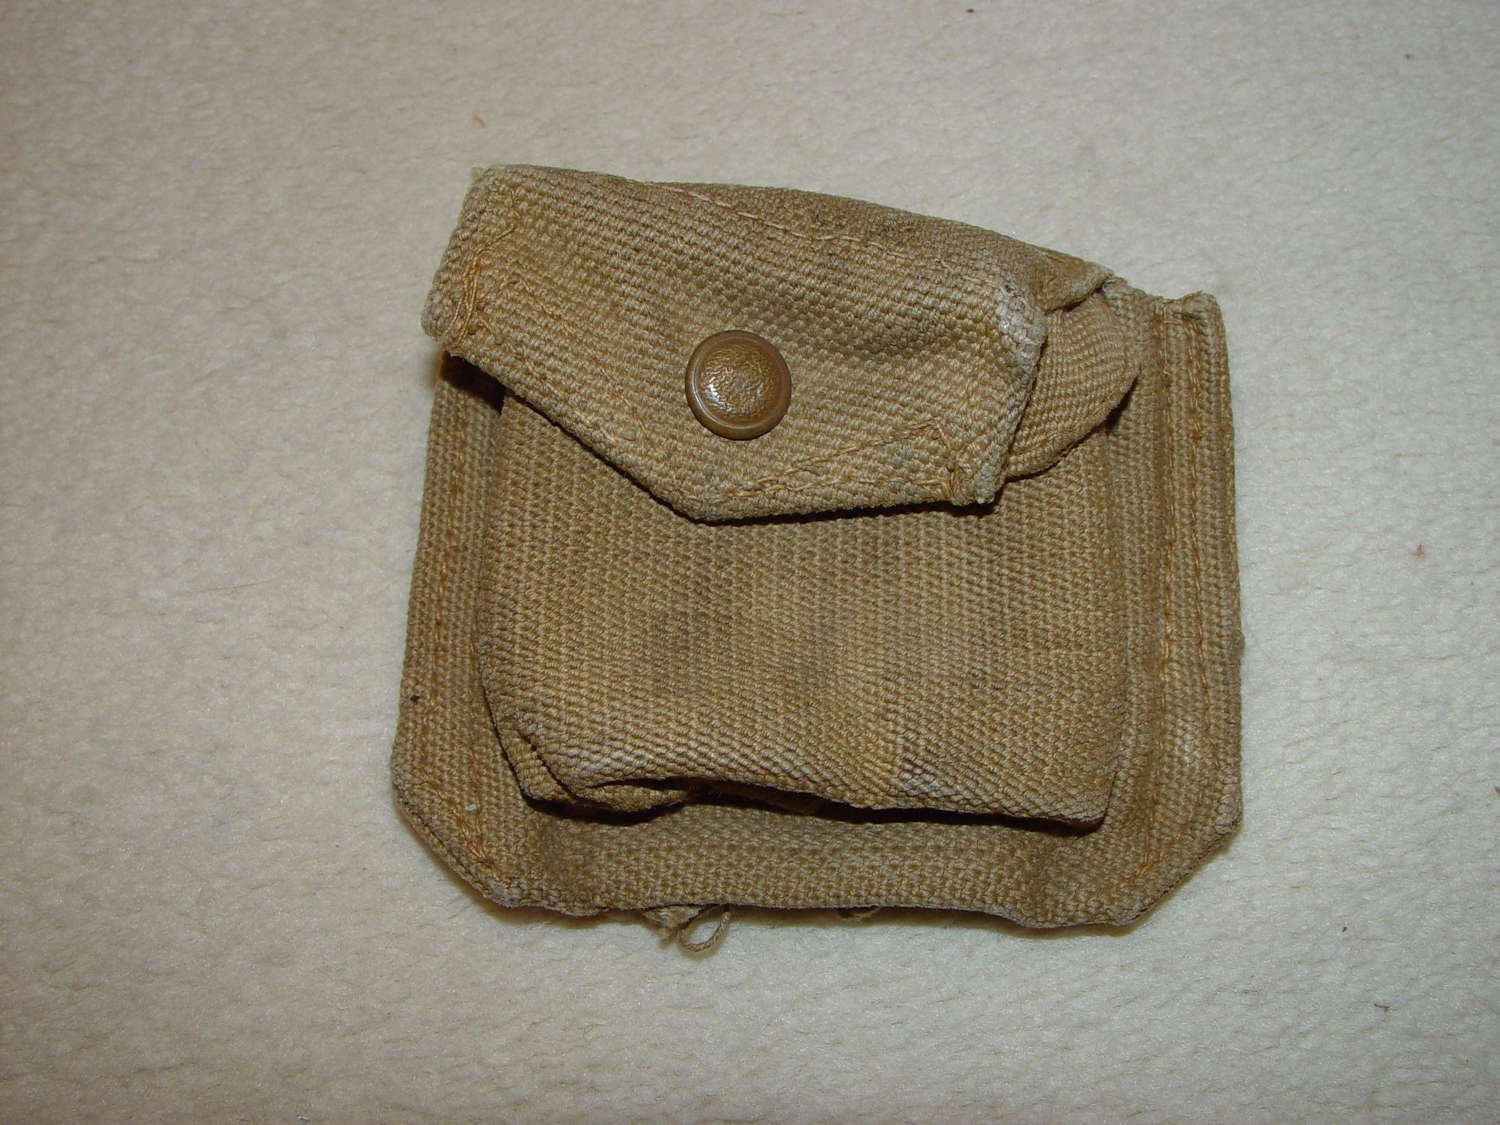 British Army pistol ammunition pouch